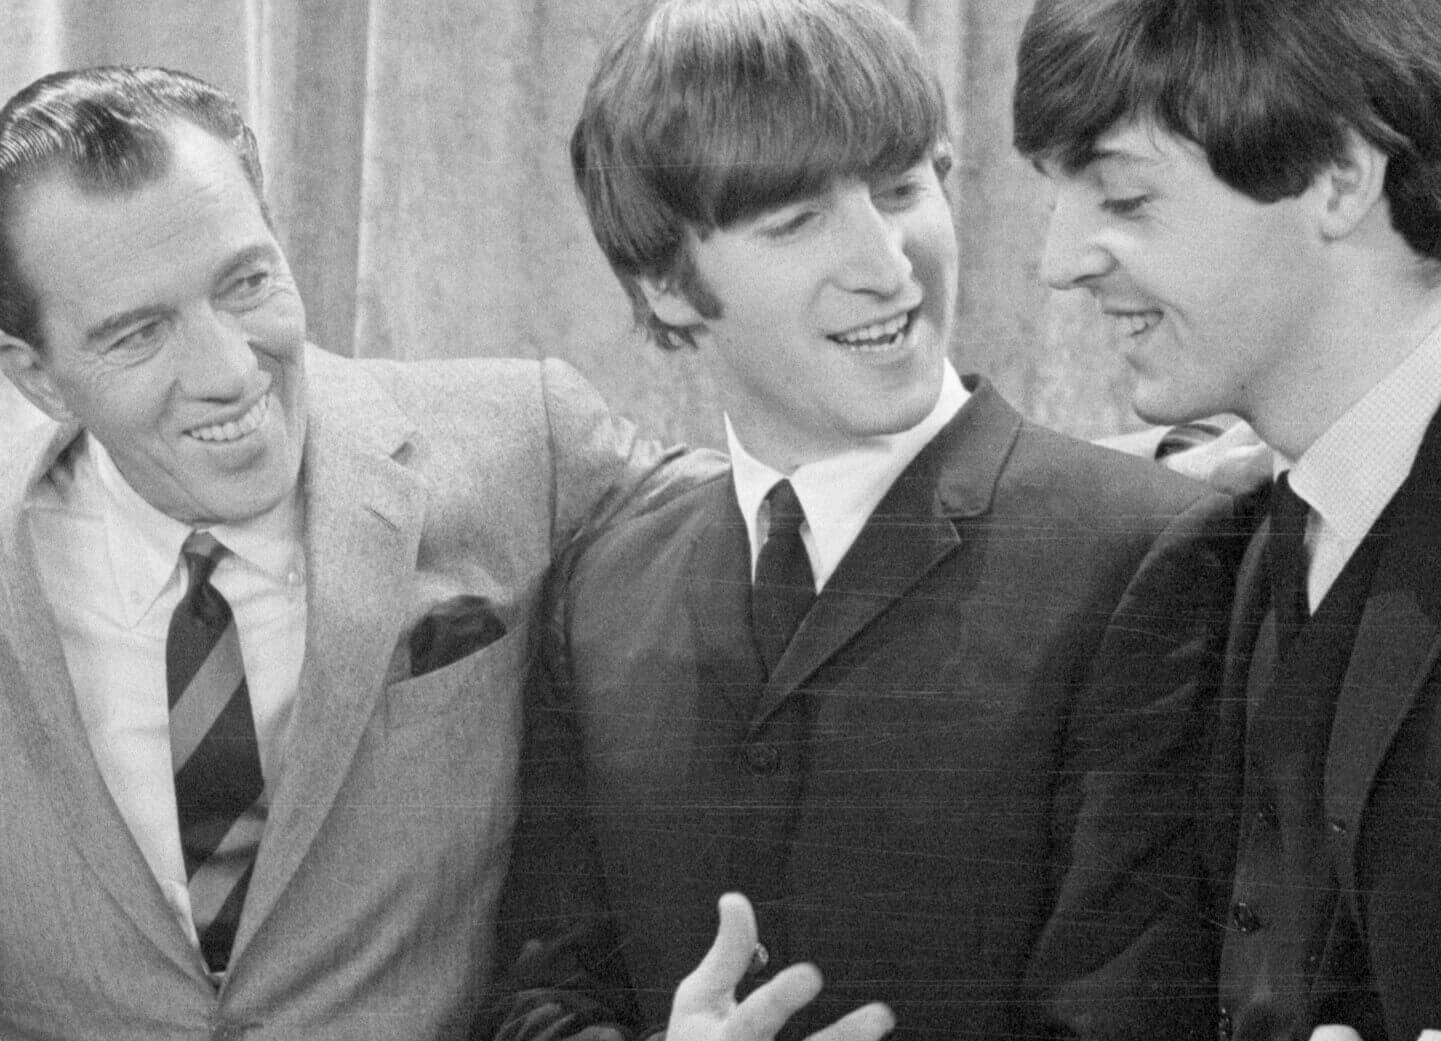 Ed Sullivan with The Beatles' John Lennon and Paul McCartney